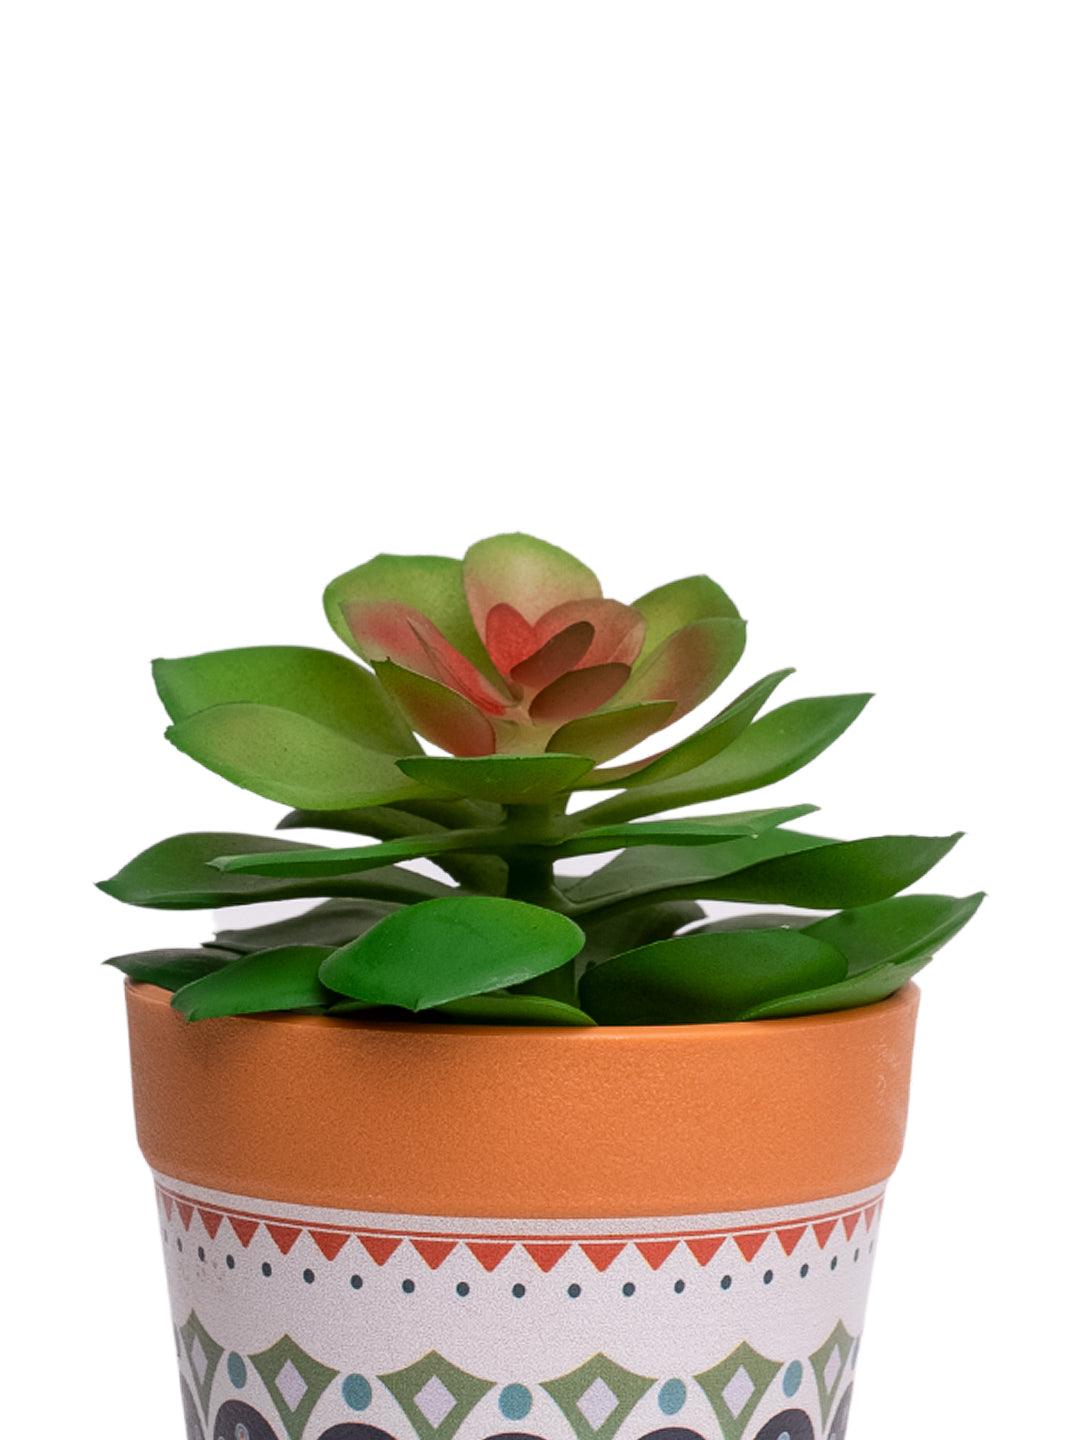 VON CASA Artificial Potted Plant - Mandala Style - MARKET99